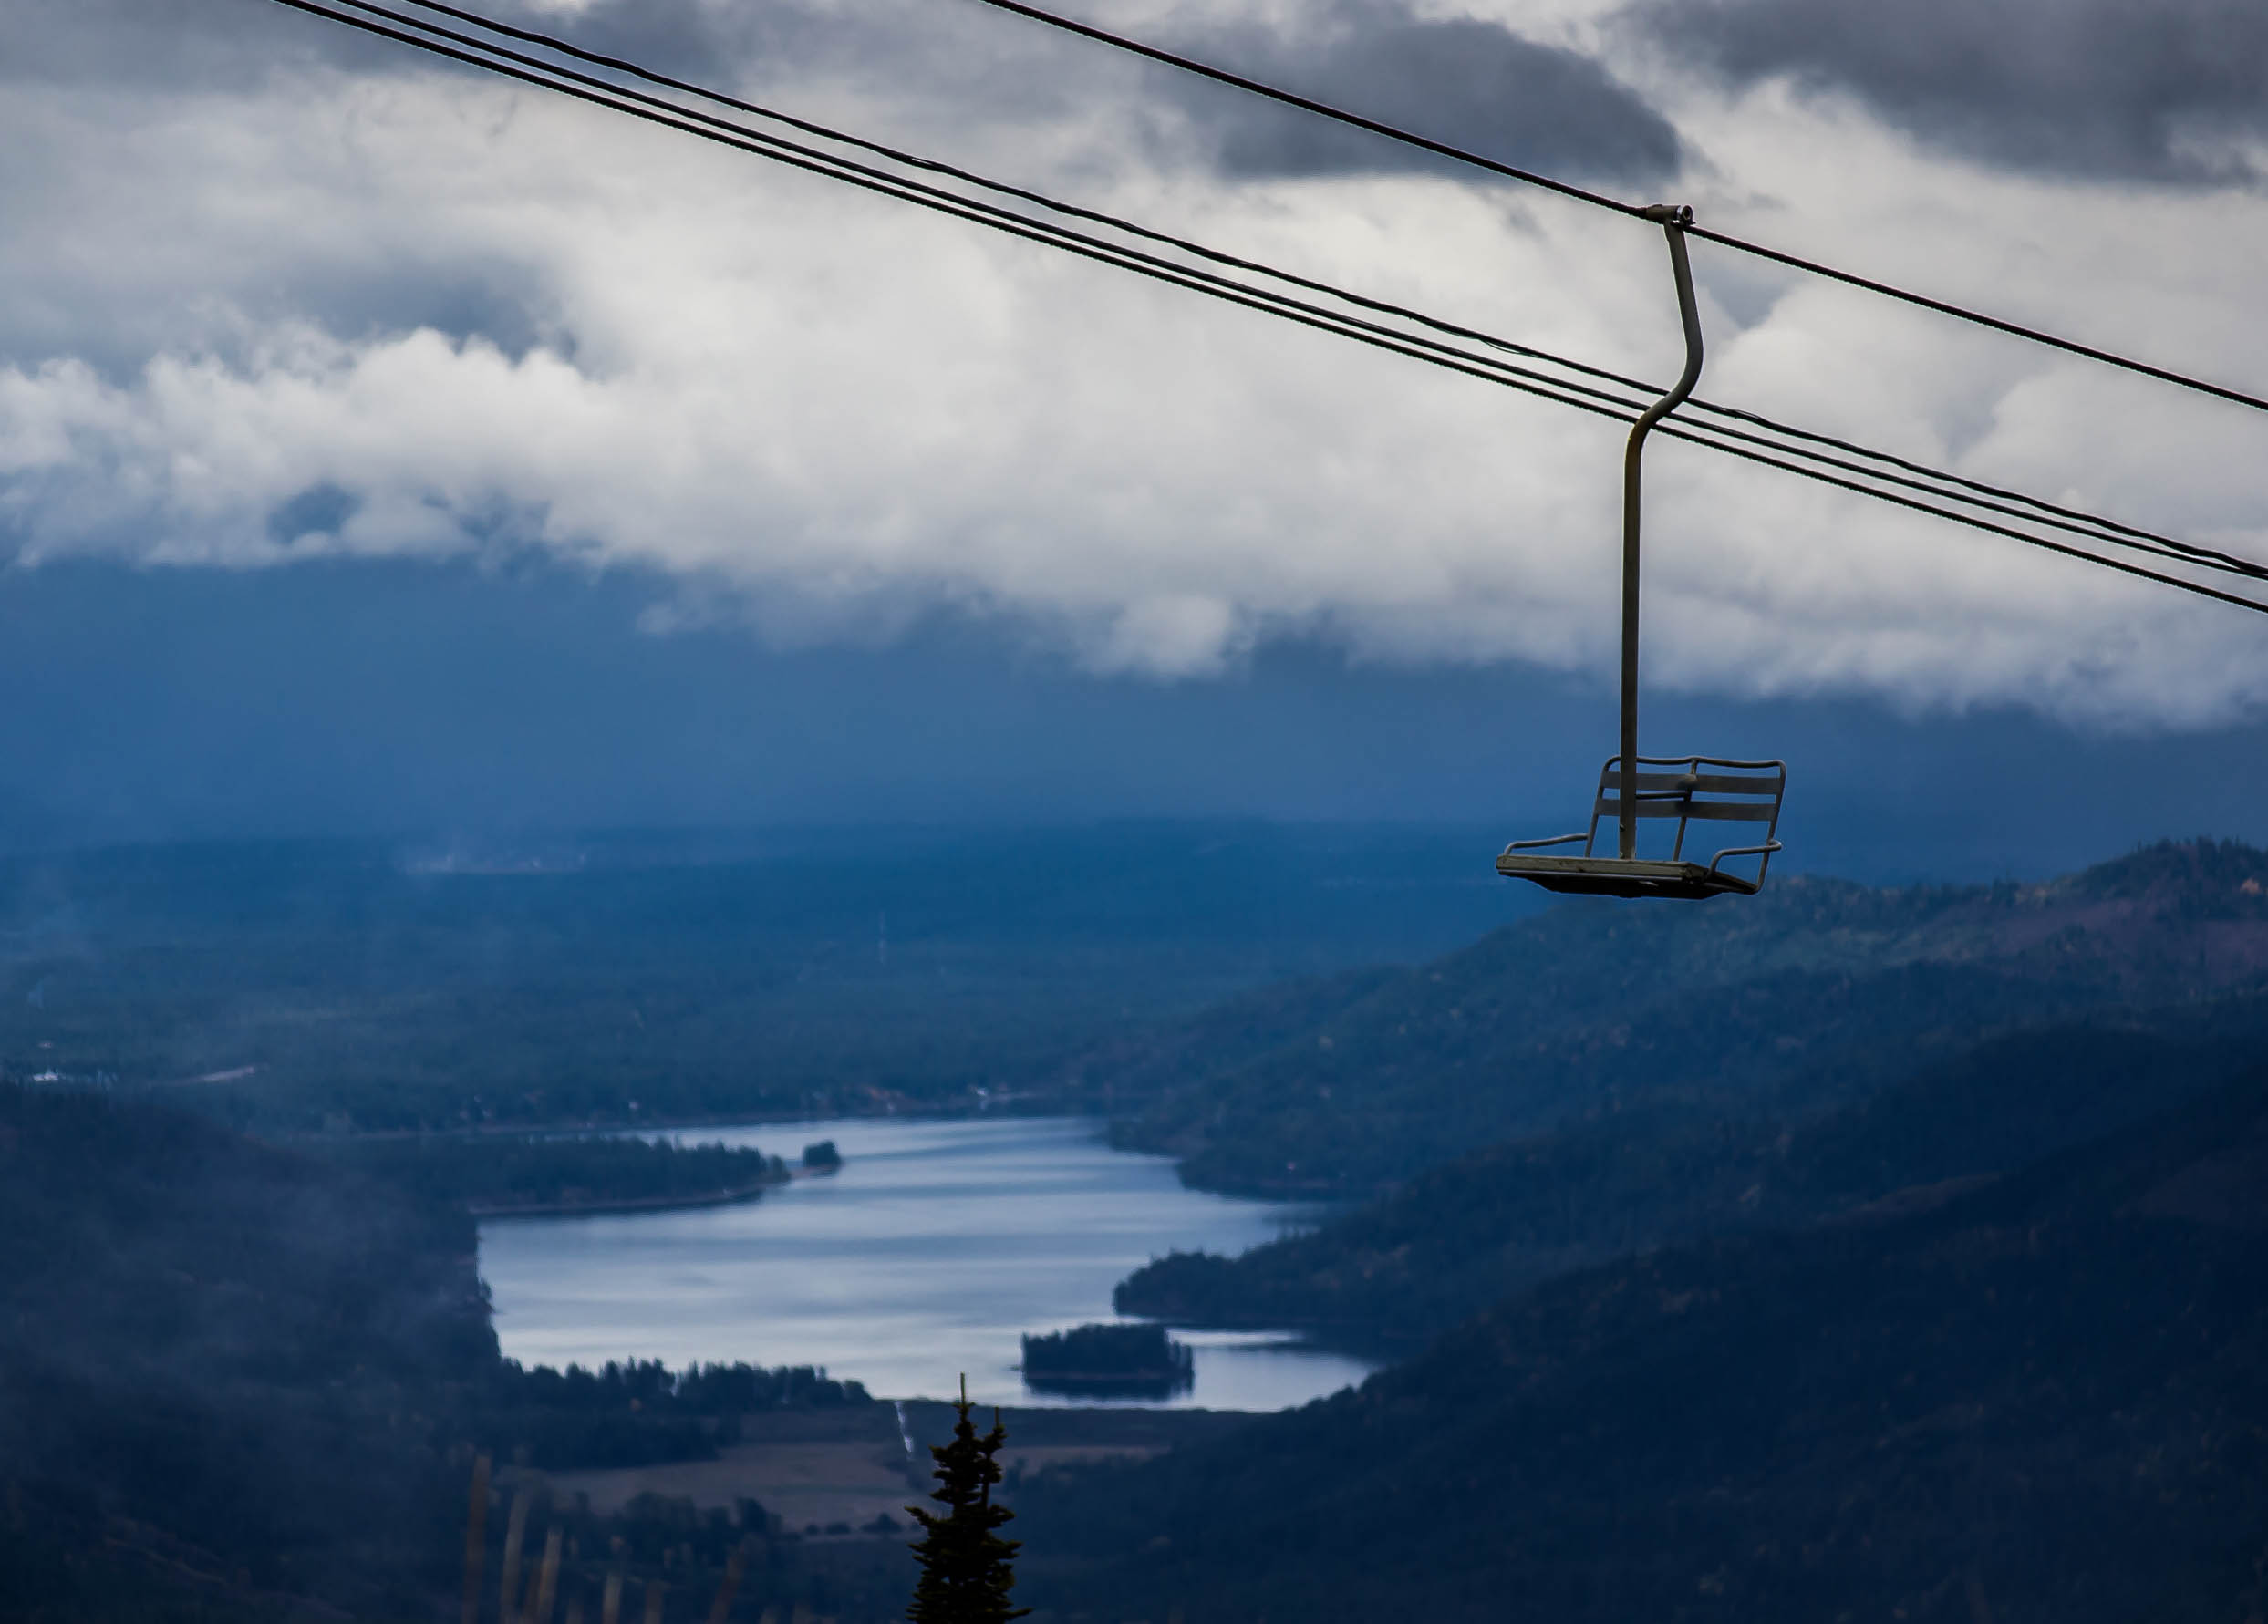 Mt Spokane - Foreground: Empty Chairlift, Background: Spirit Lake